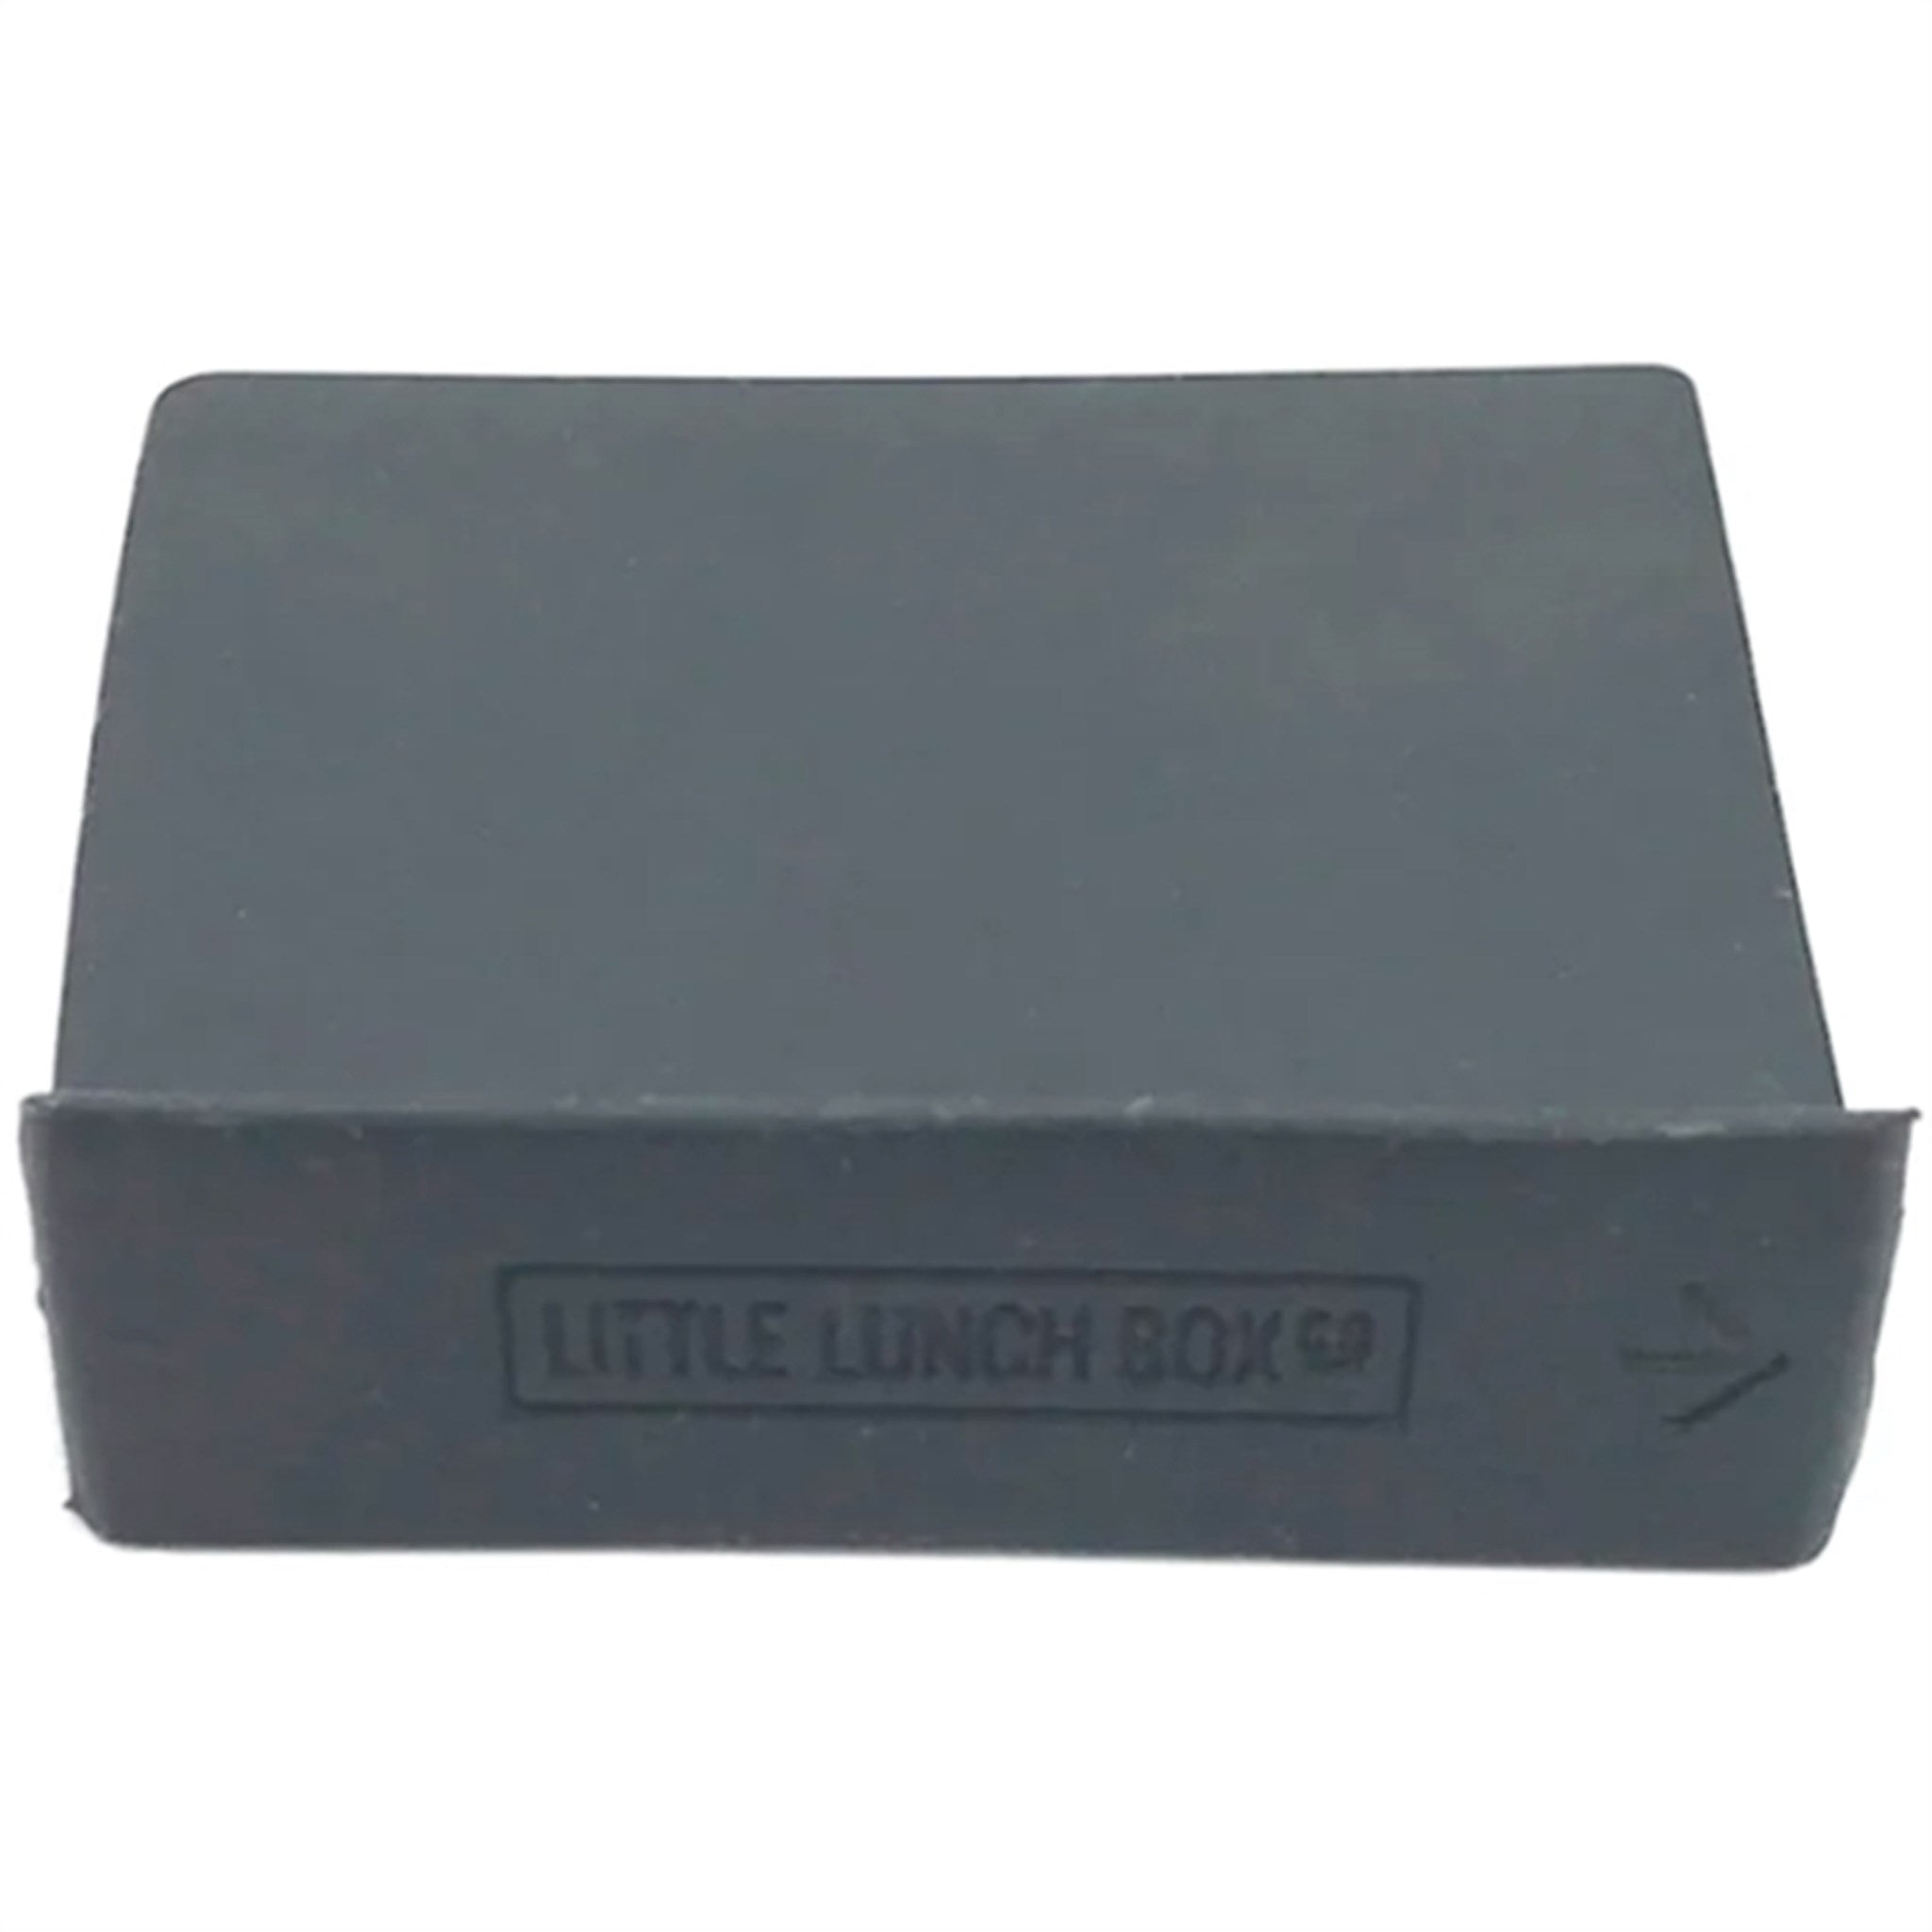 Little Lunch Box Co Bento 2/5 Divider Dark Grey Construction